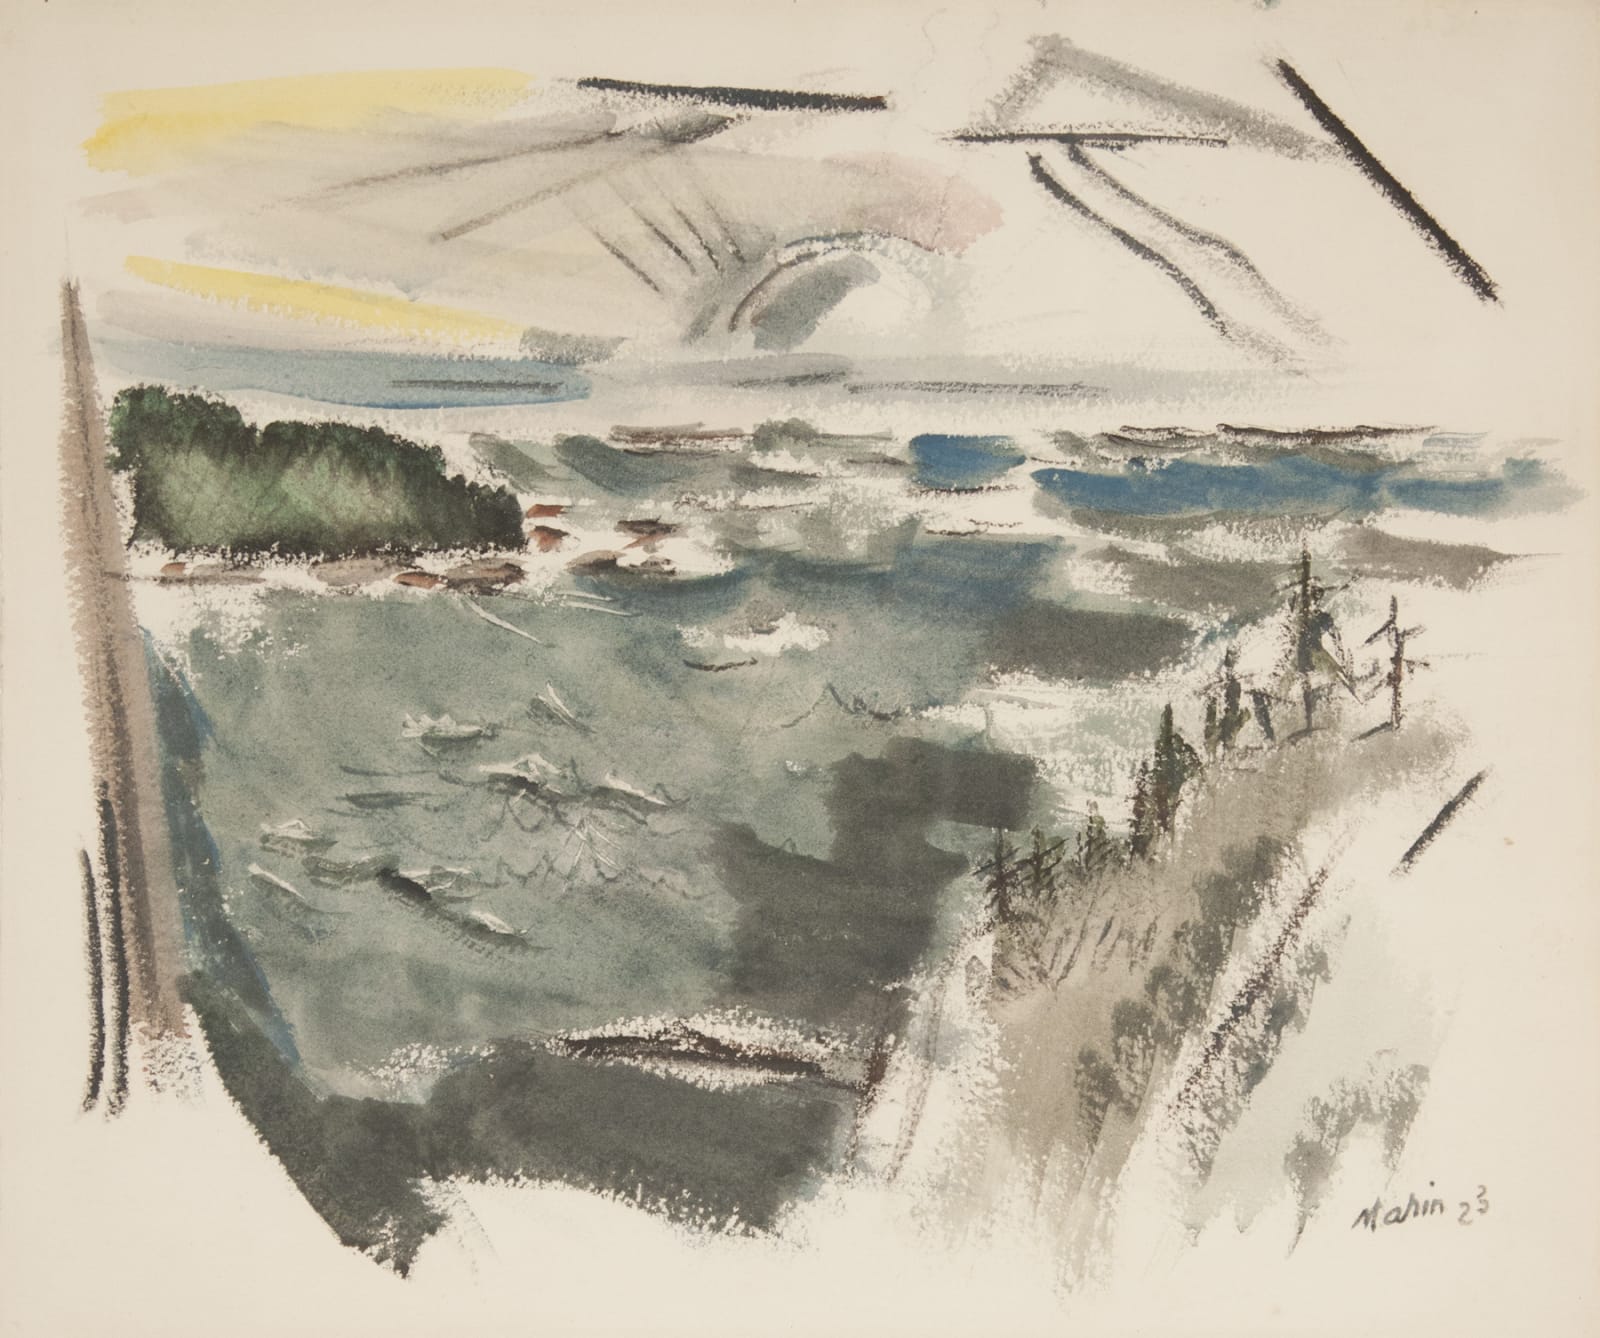 John Marin, Sea Movement, Maine, 1923